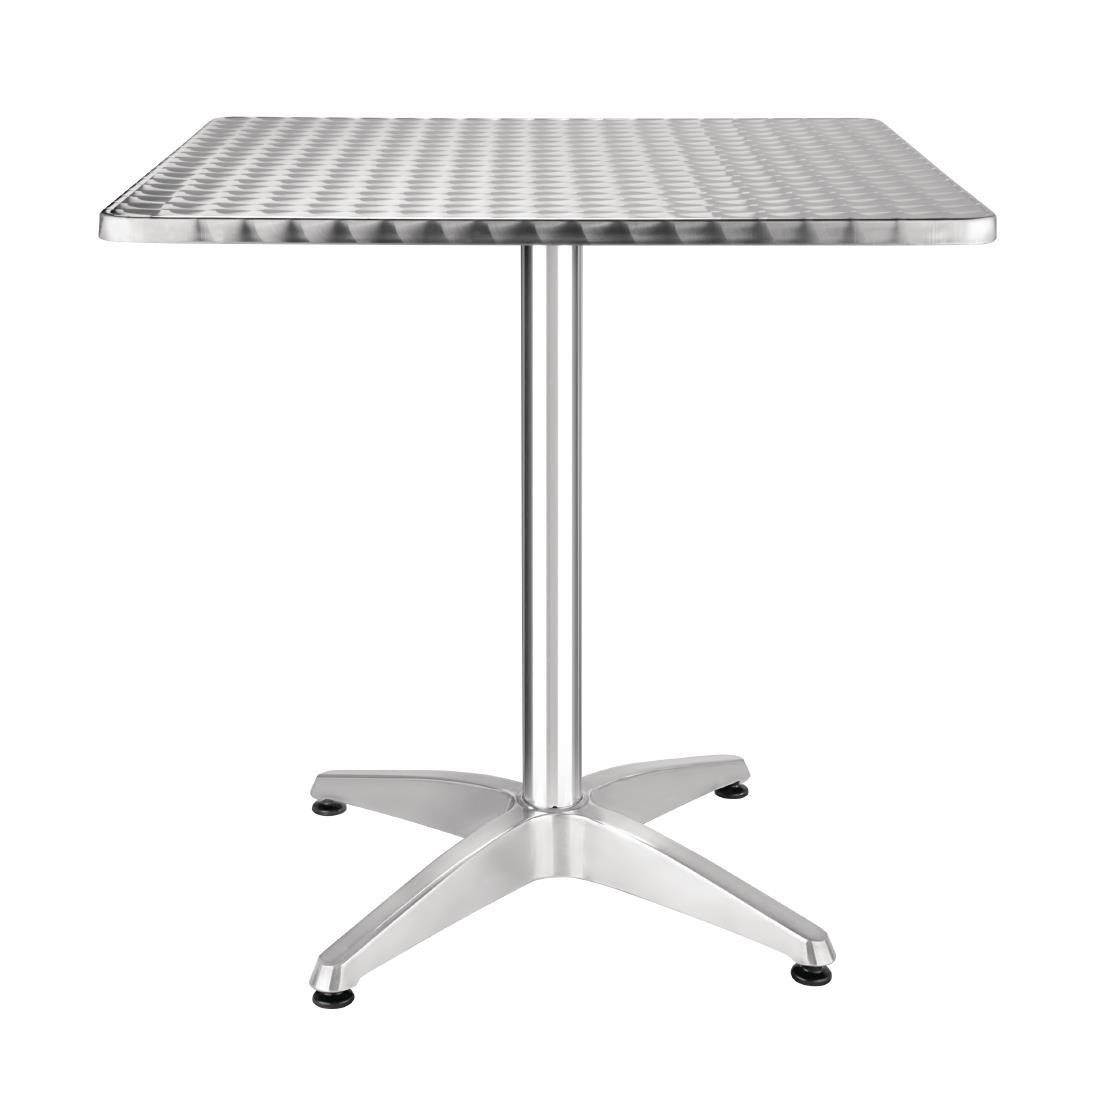 Bolero Square Stainless Steel Bistro Table 700mm - CG834  - 1